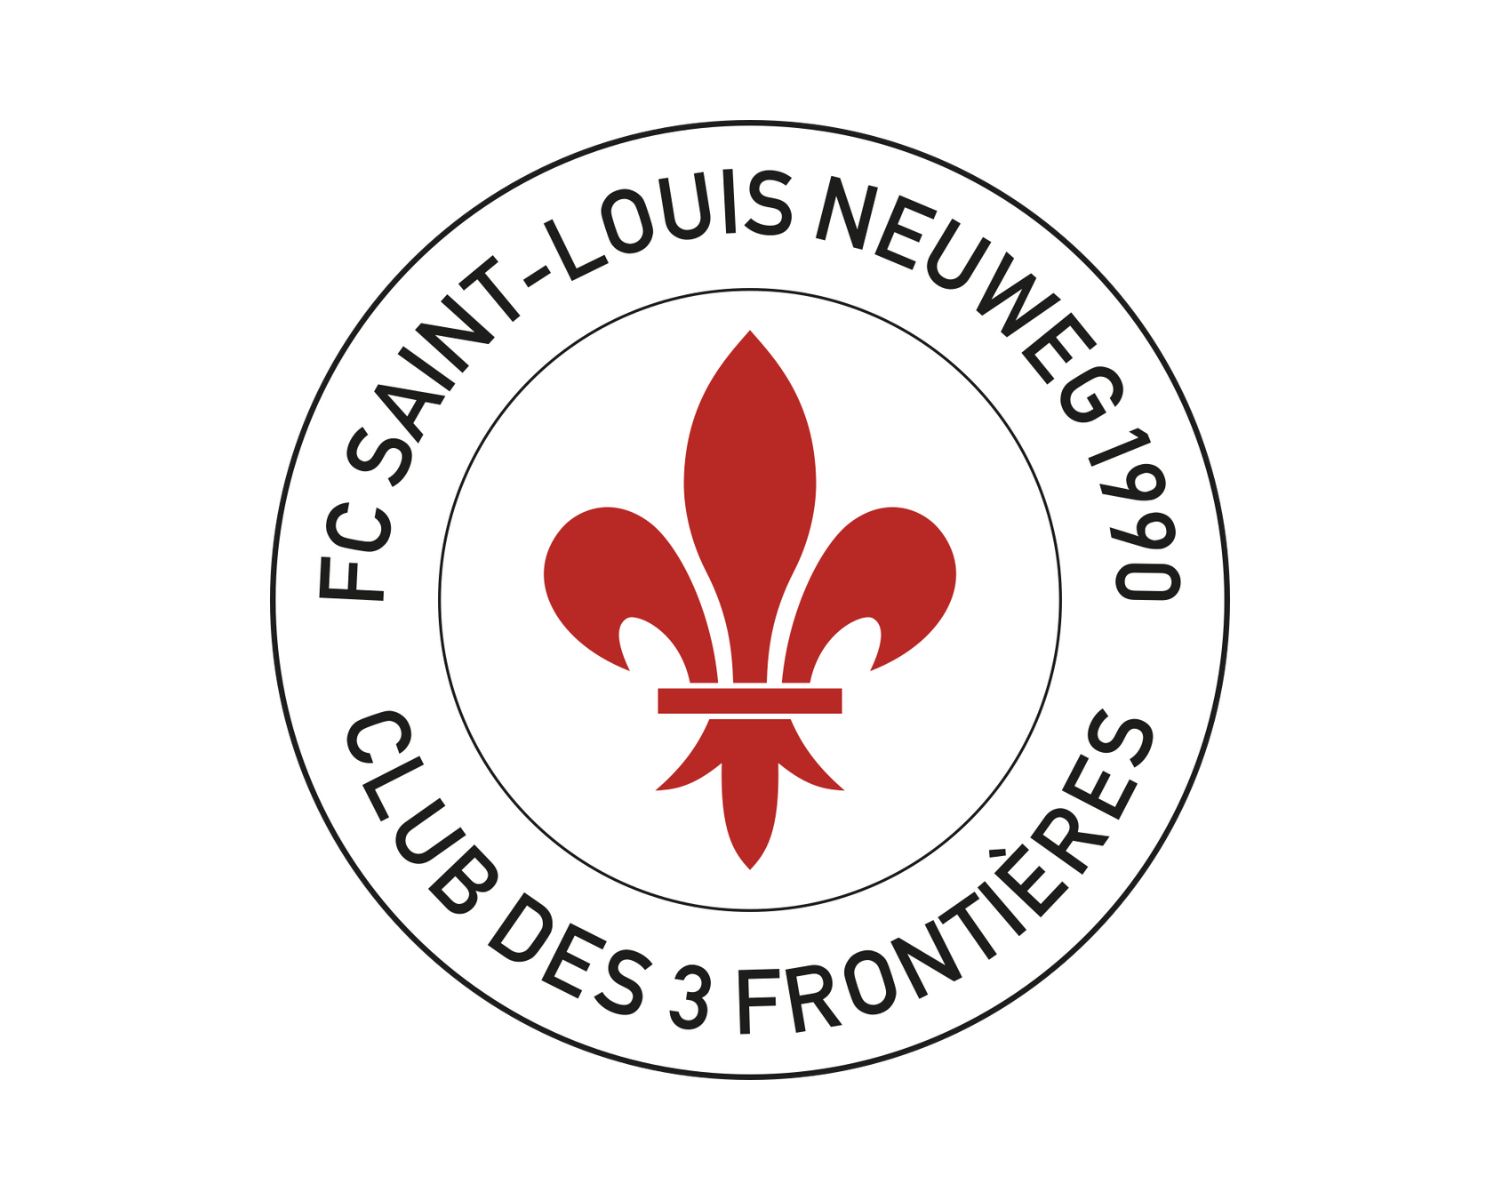 fc-saint-louis-neuweg-20-football-club-facts